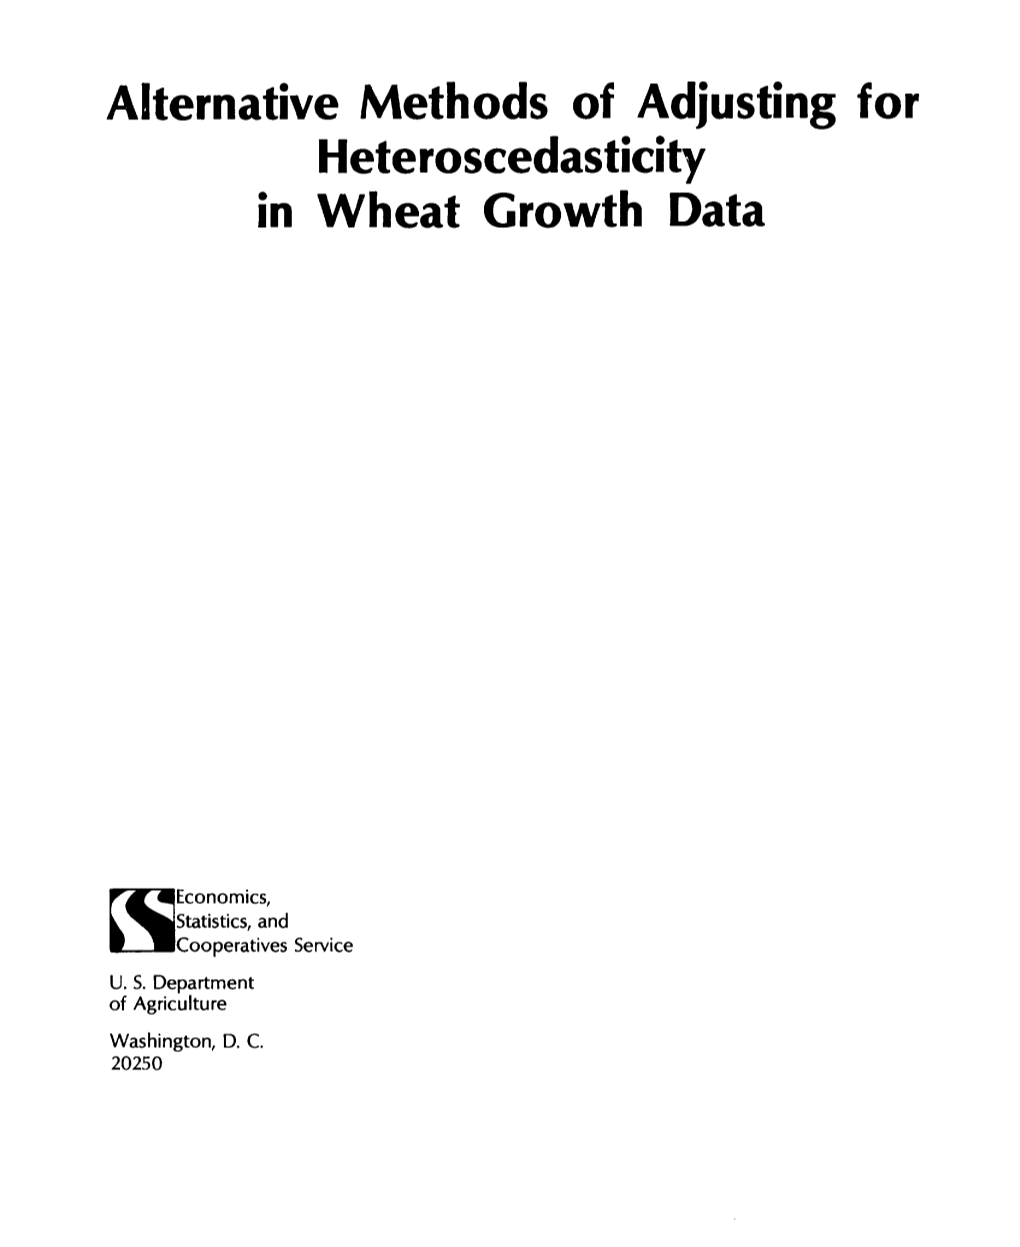 Alternative Methods of Adjusting for Heteroscedasticity in Wheat Growth Data